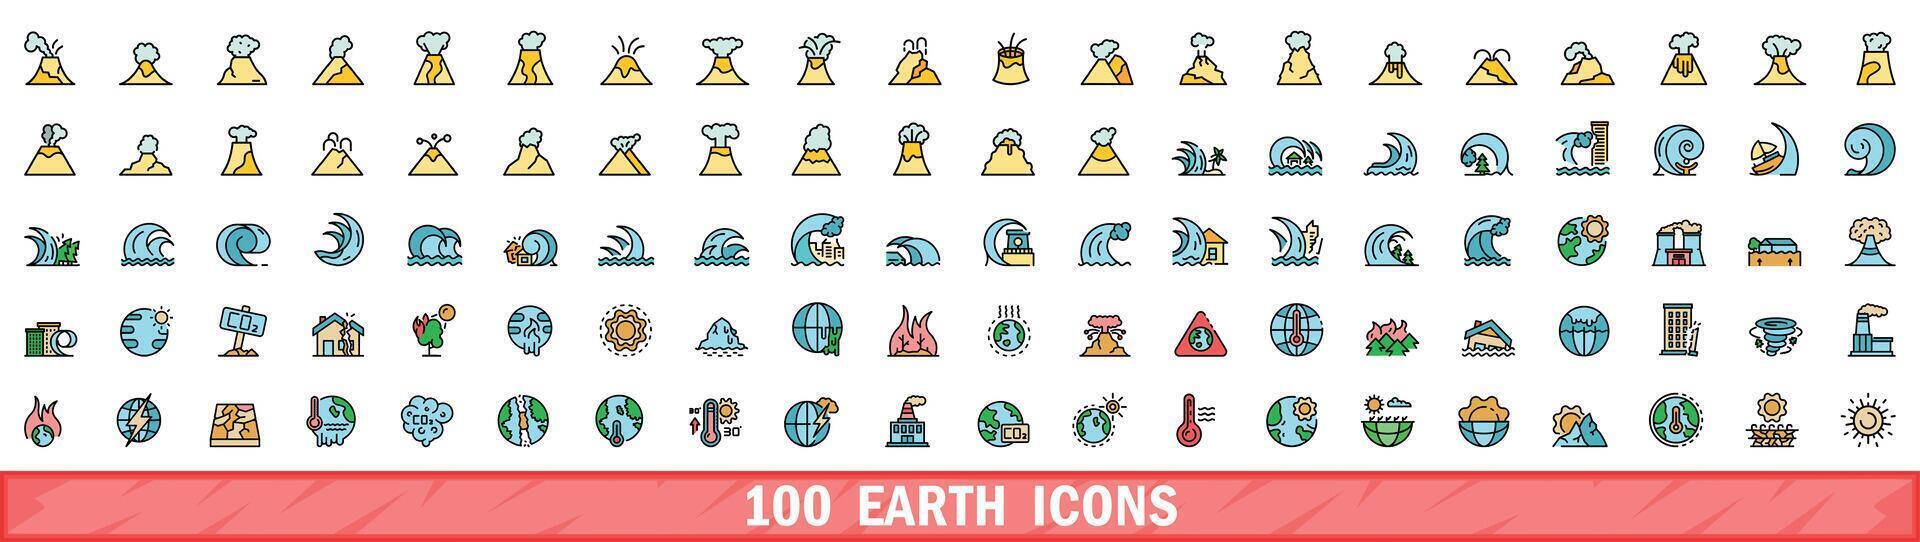 100 terra ícones definir, cor linha estilo vetor